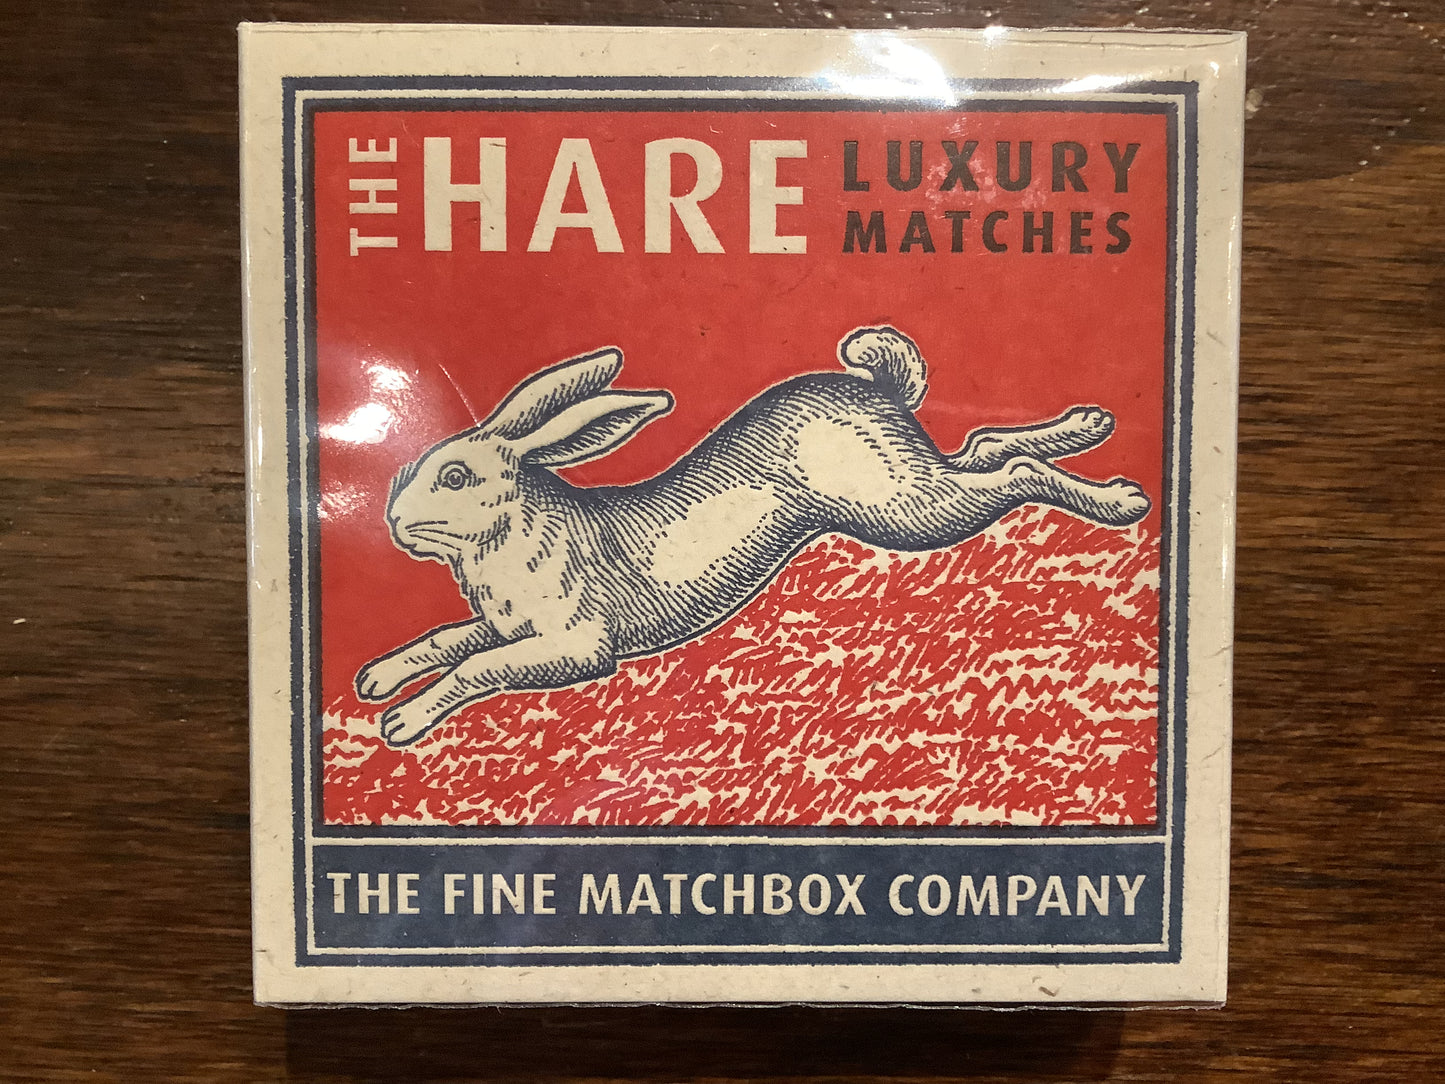 Archivist Gallery Matchbooks